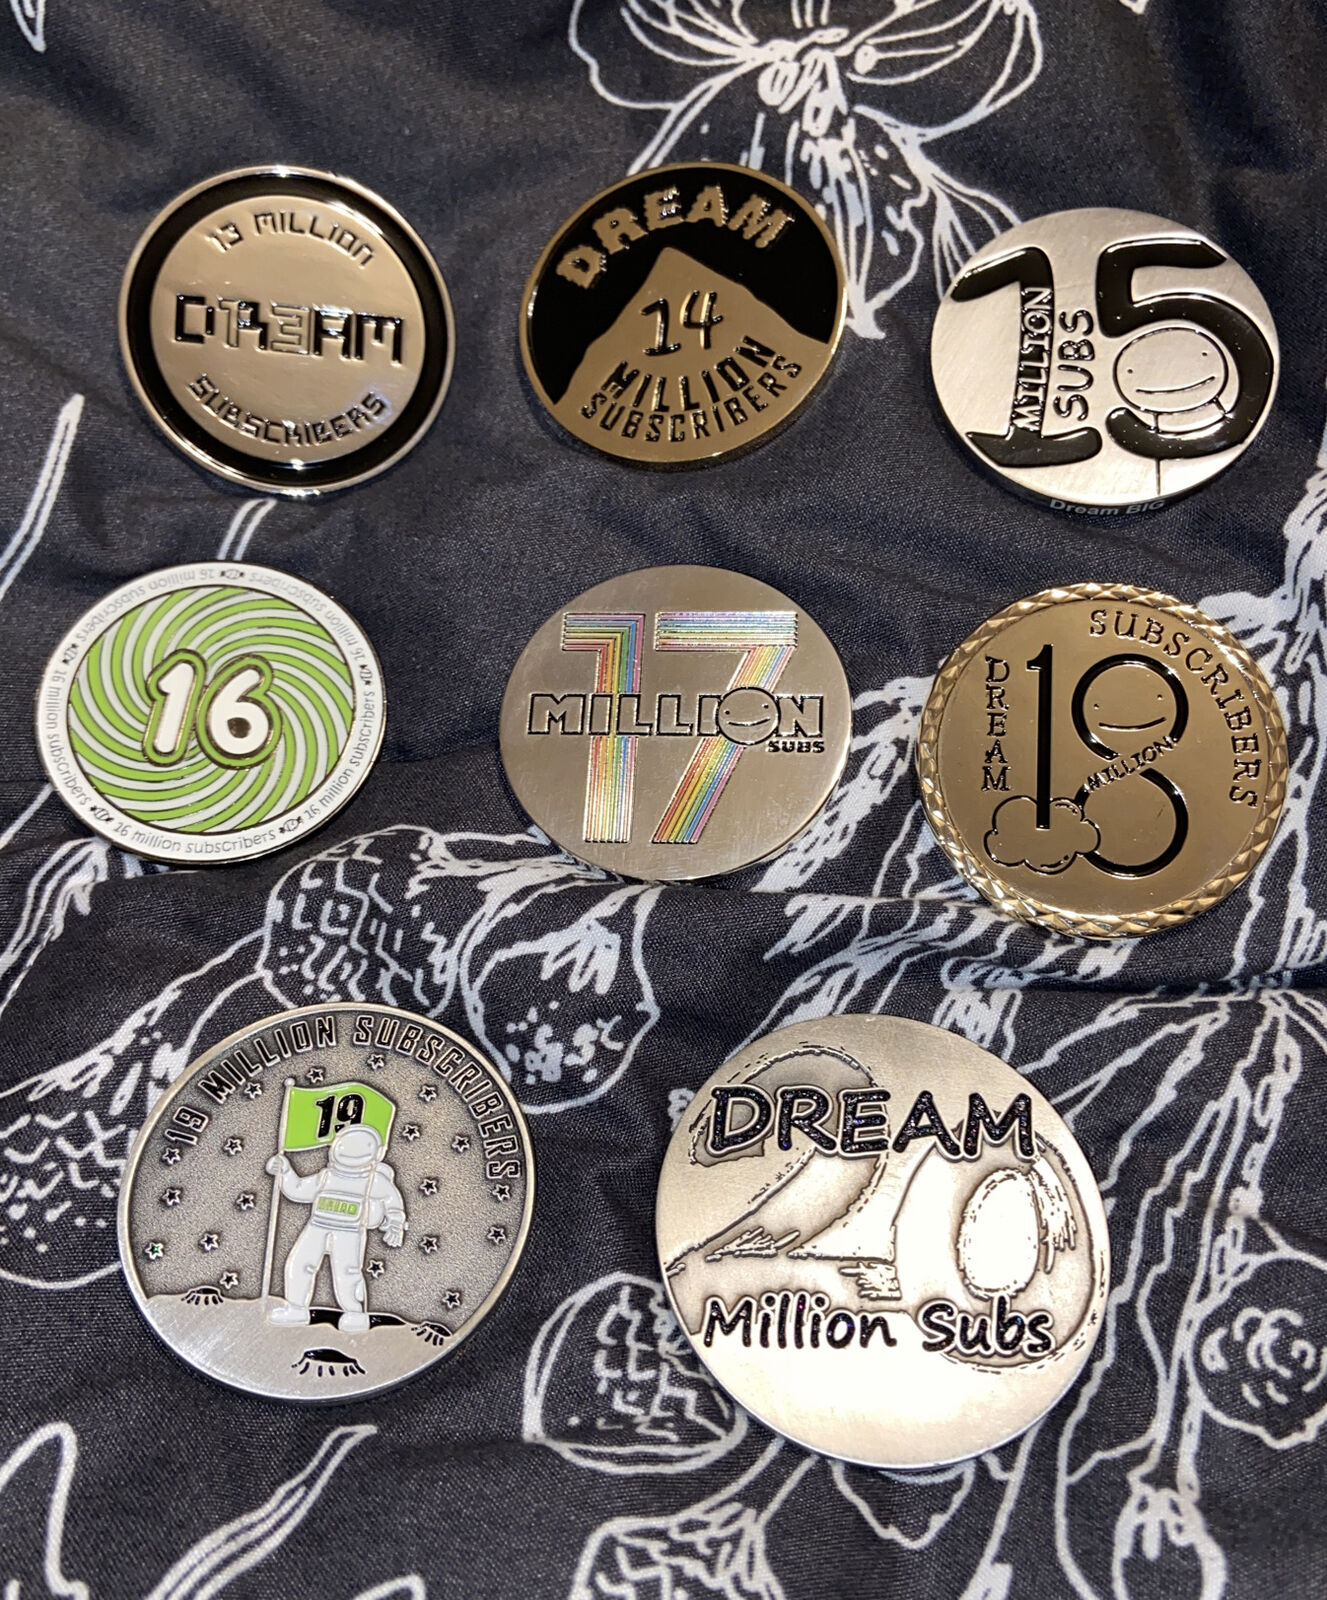 Dream DreamWasTaken Collectable Subscriber Coins 13 Million - 20 Million